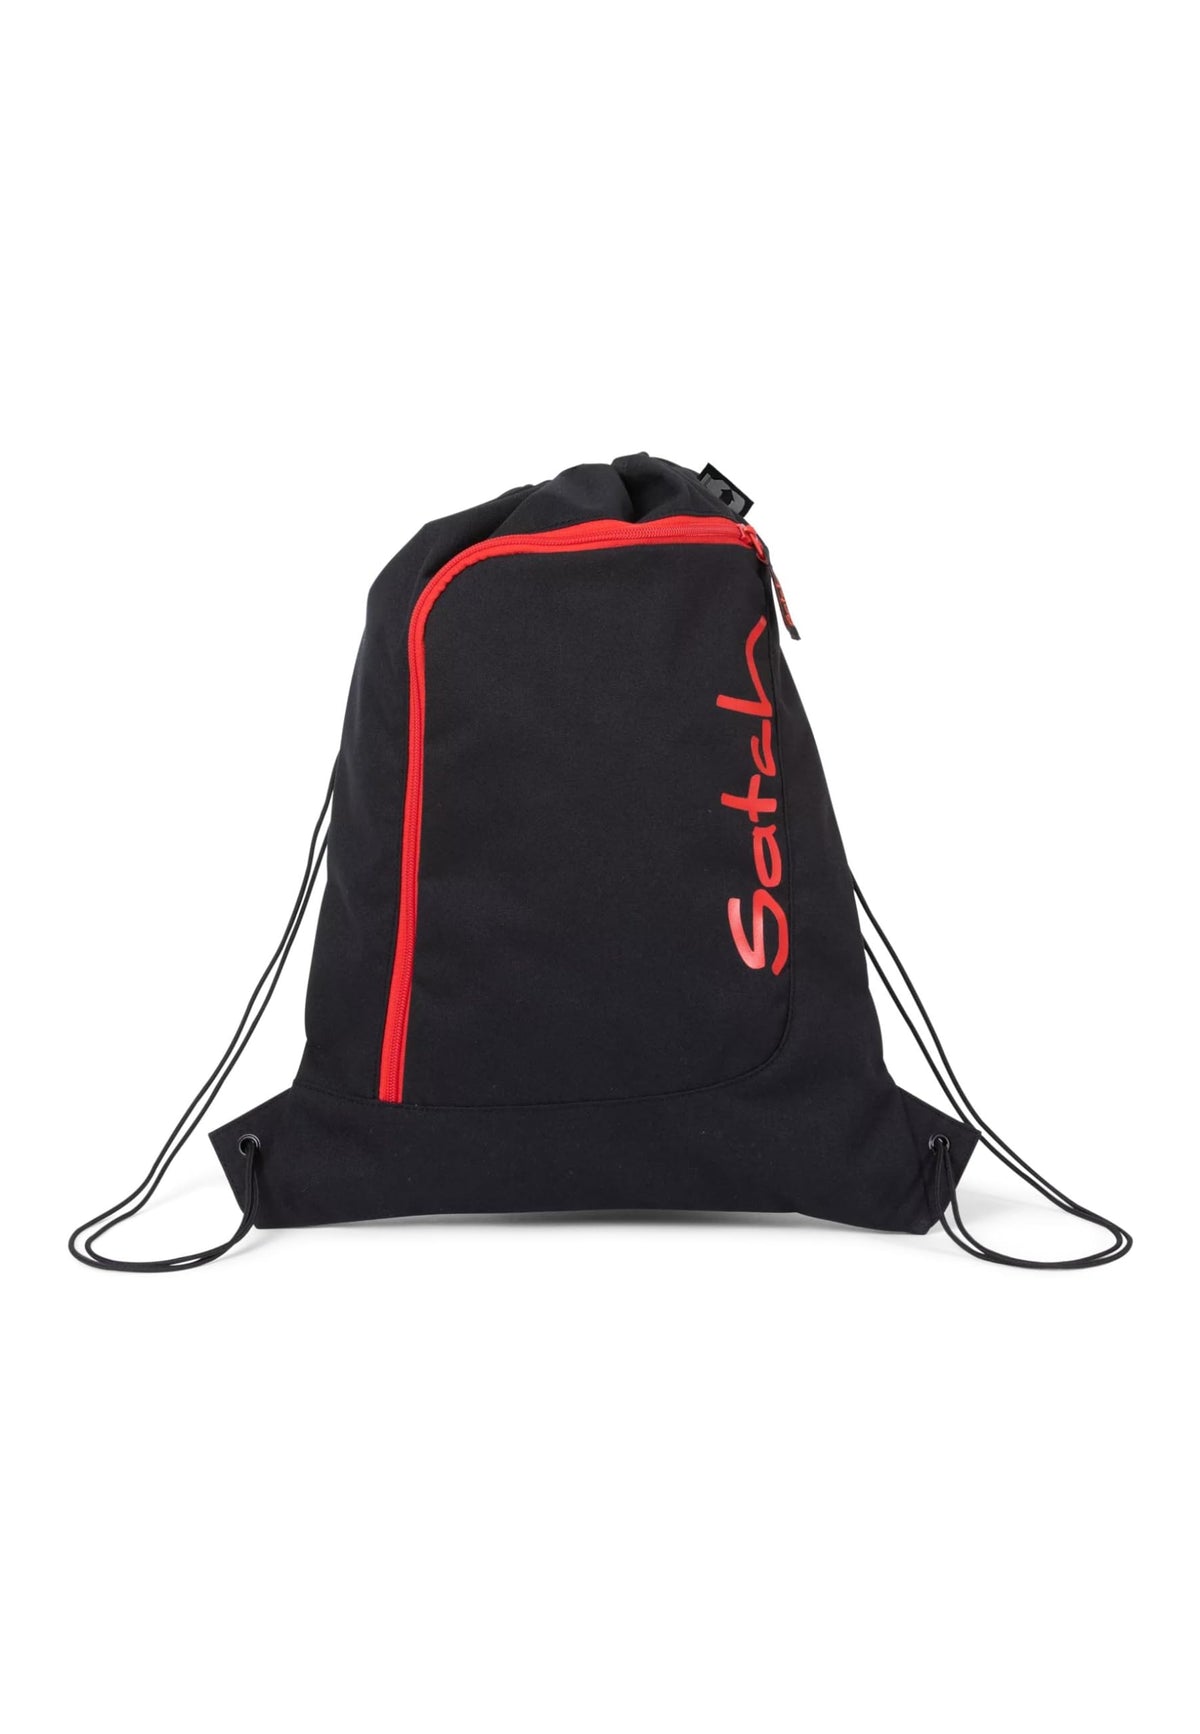 Satch Unisex Kid's Fire Phantom Sport Bag, Black/Red, One Size